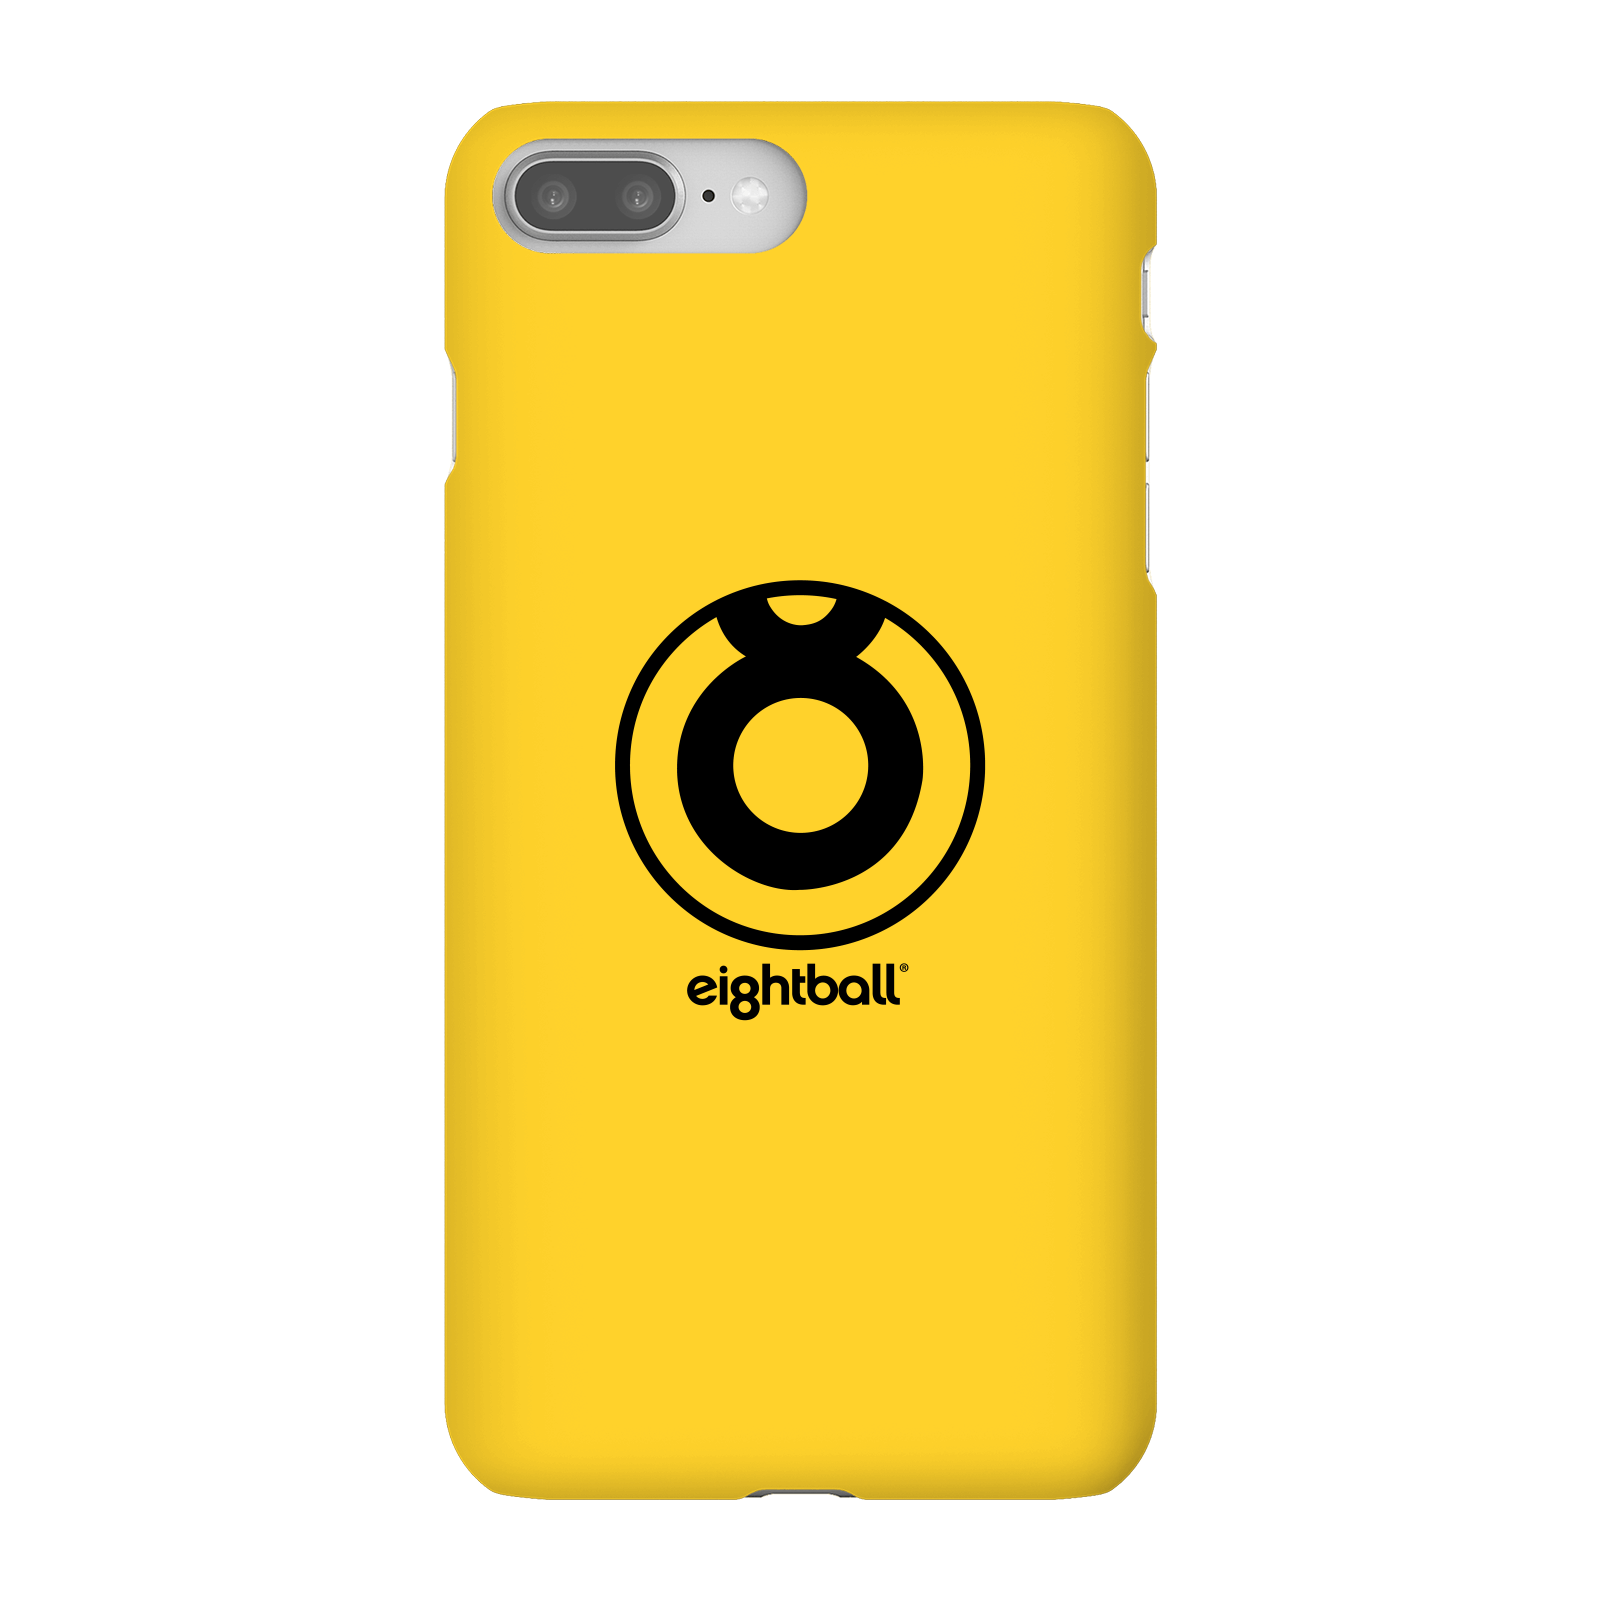 Funda Móvil Ei8htball Large Circle Logo para iPhone y Android - iPhone 8 Plus - Carcasa rígida - Brillante